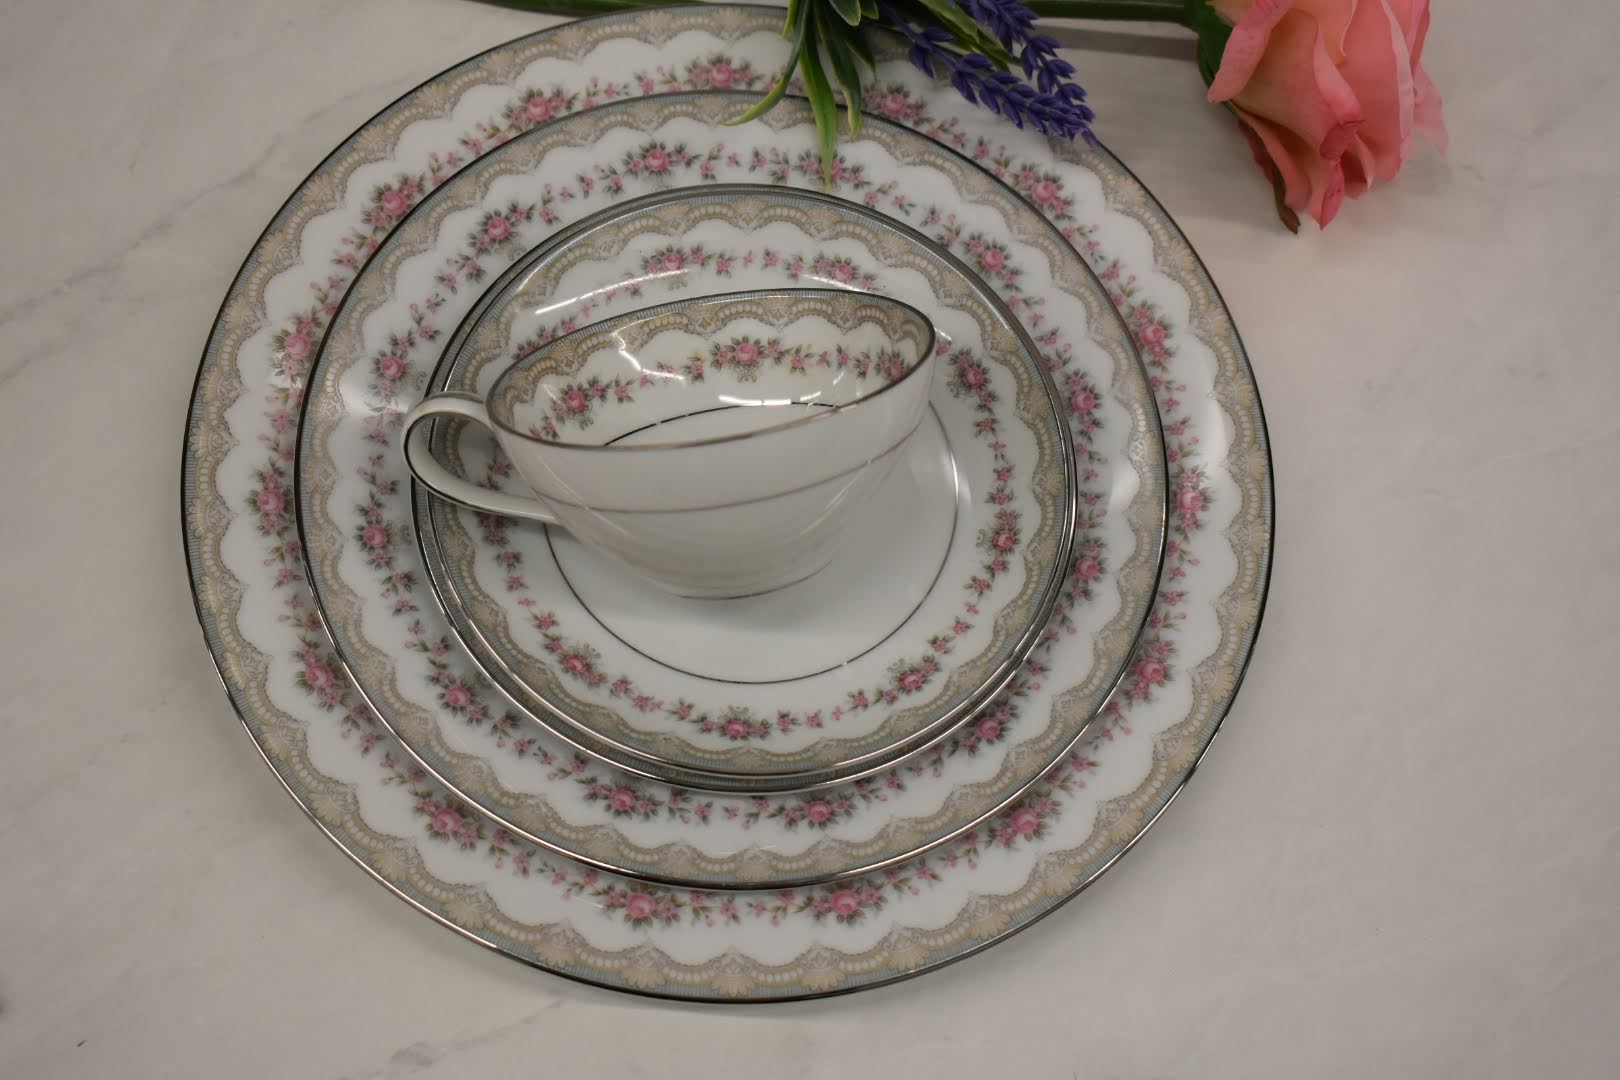 Noritake Glenwood - Fine Porcelain China - Platinum Rim - 5770 pattern- 5 piece Dinner Set